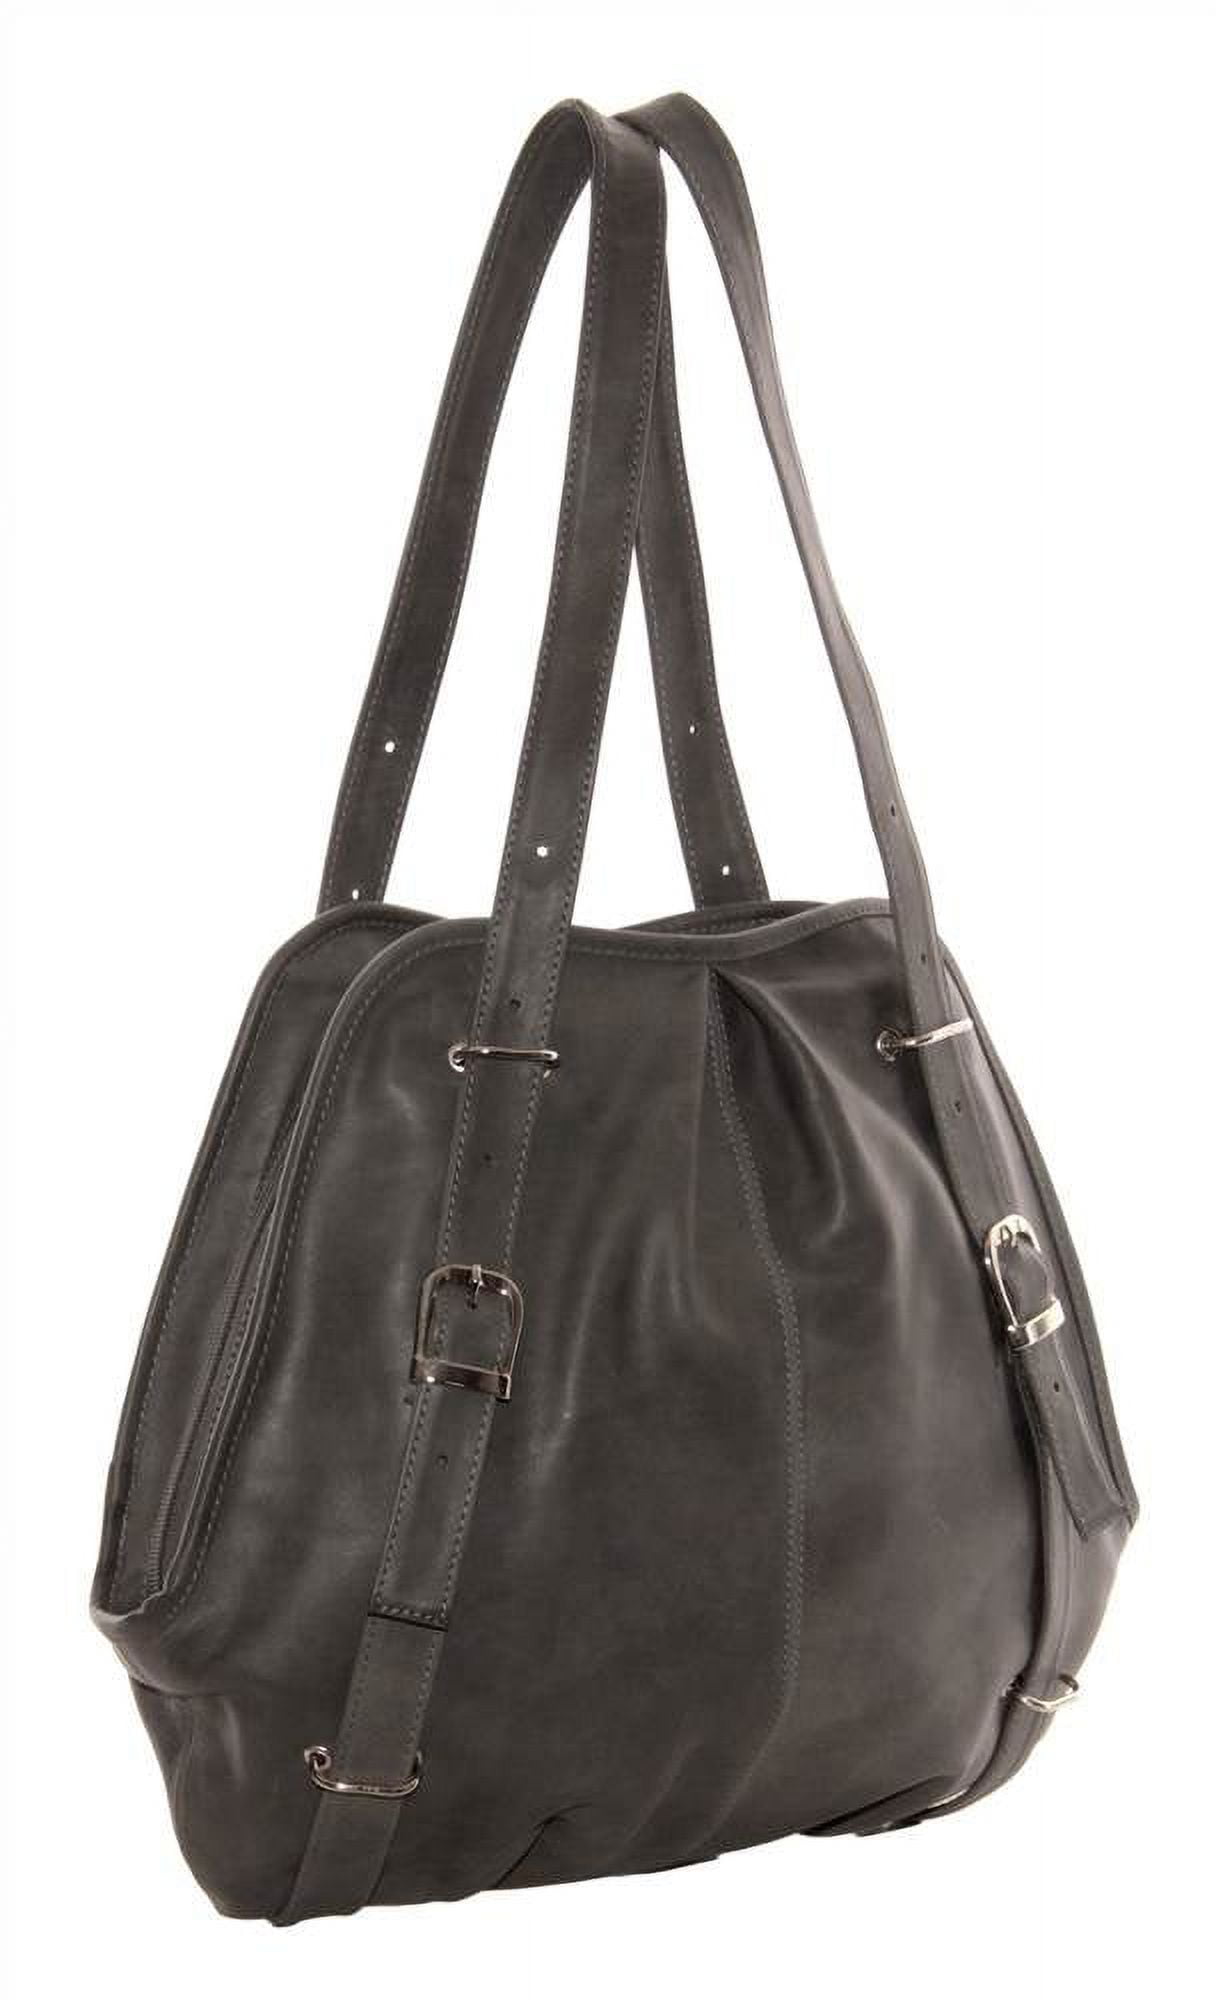 Convertible Buckle Backpack/Shoulder Bag - Walmart.com